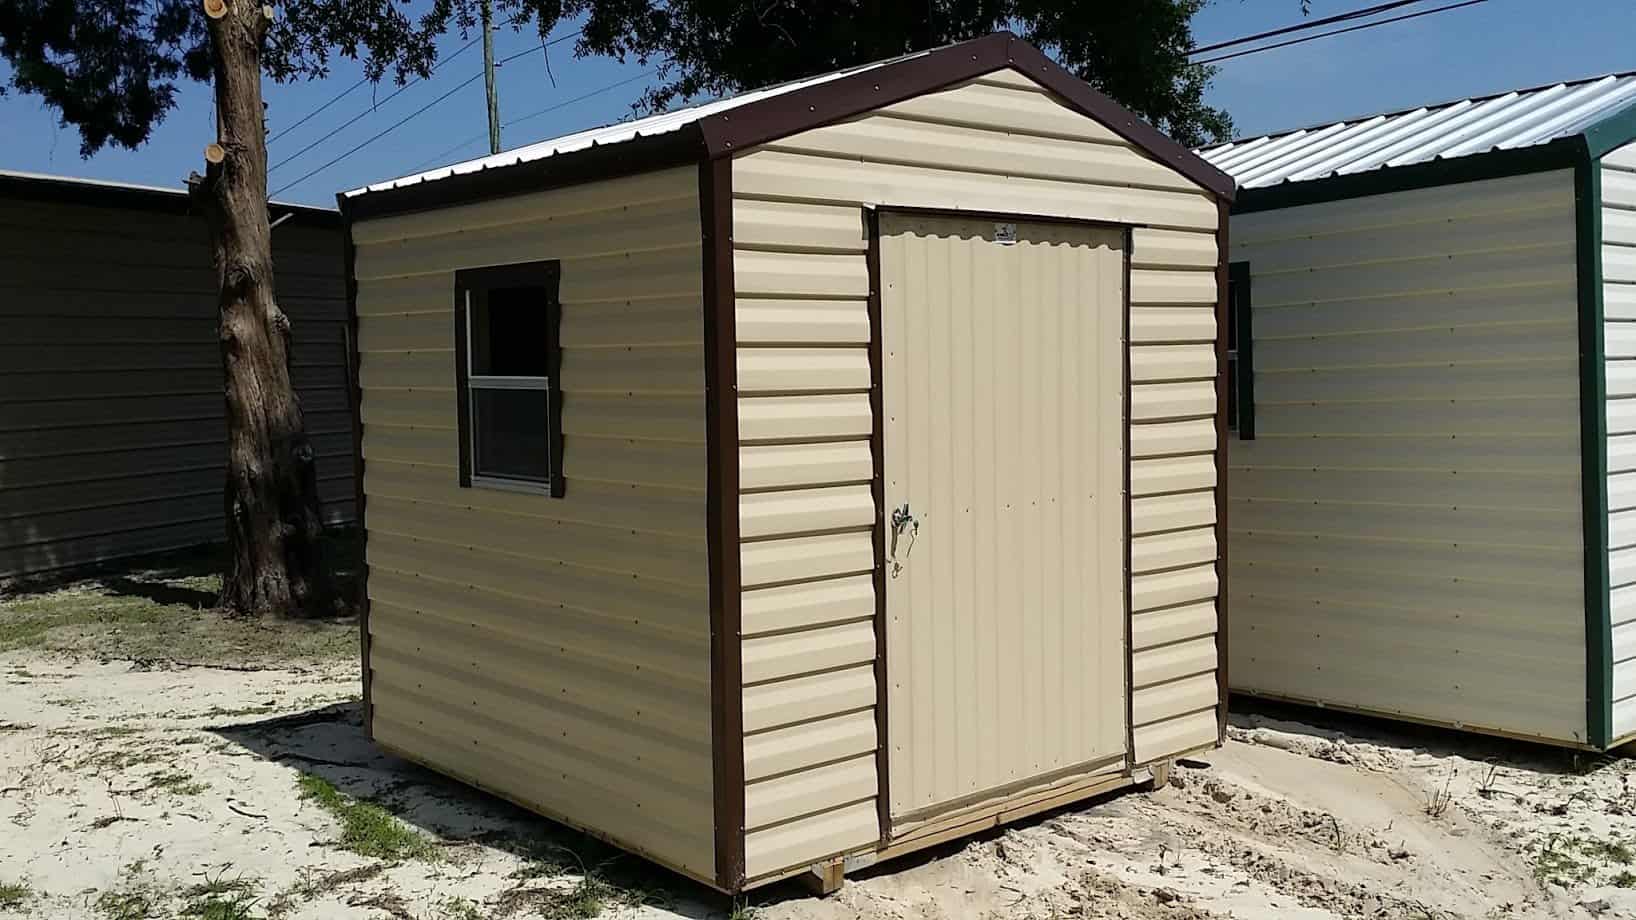 Robin sheds Probuilt Structures Sheds For Sale In Central Florida Tan And Brown Metal Shed 10x14